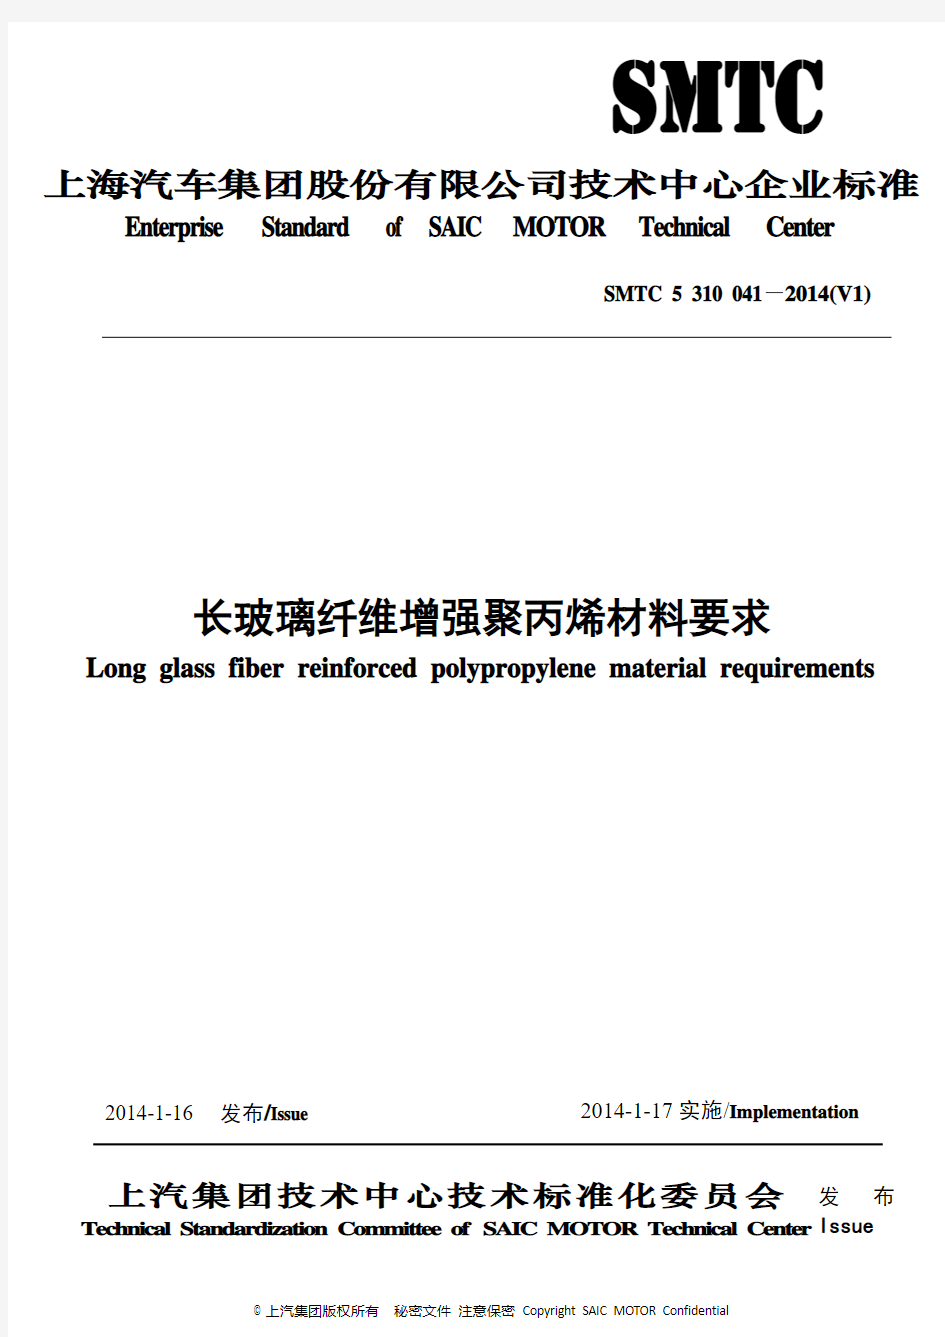 SMTC 5 310 041 长玻璃纤维增强聚丙烯材料要求(20140116)